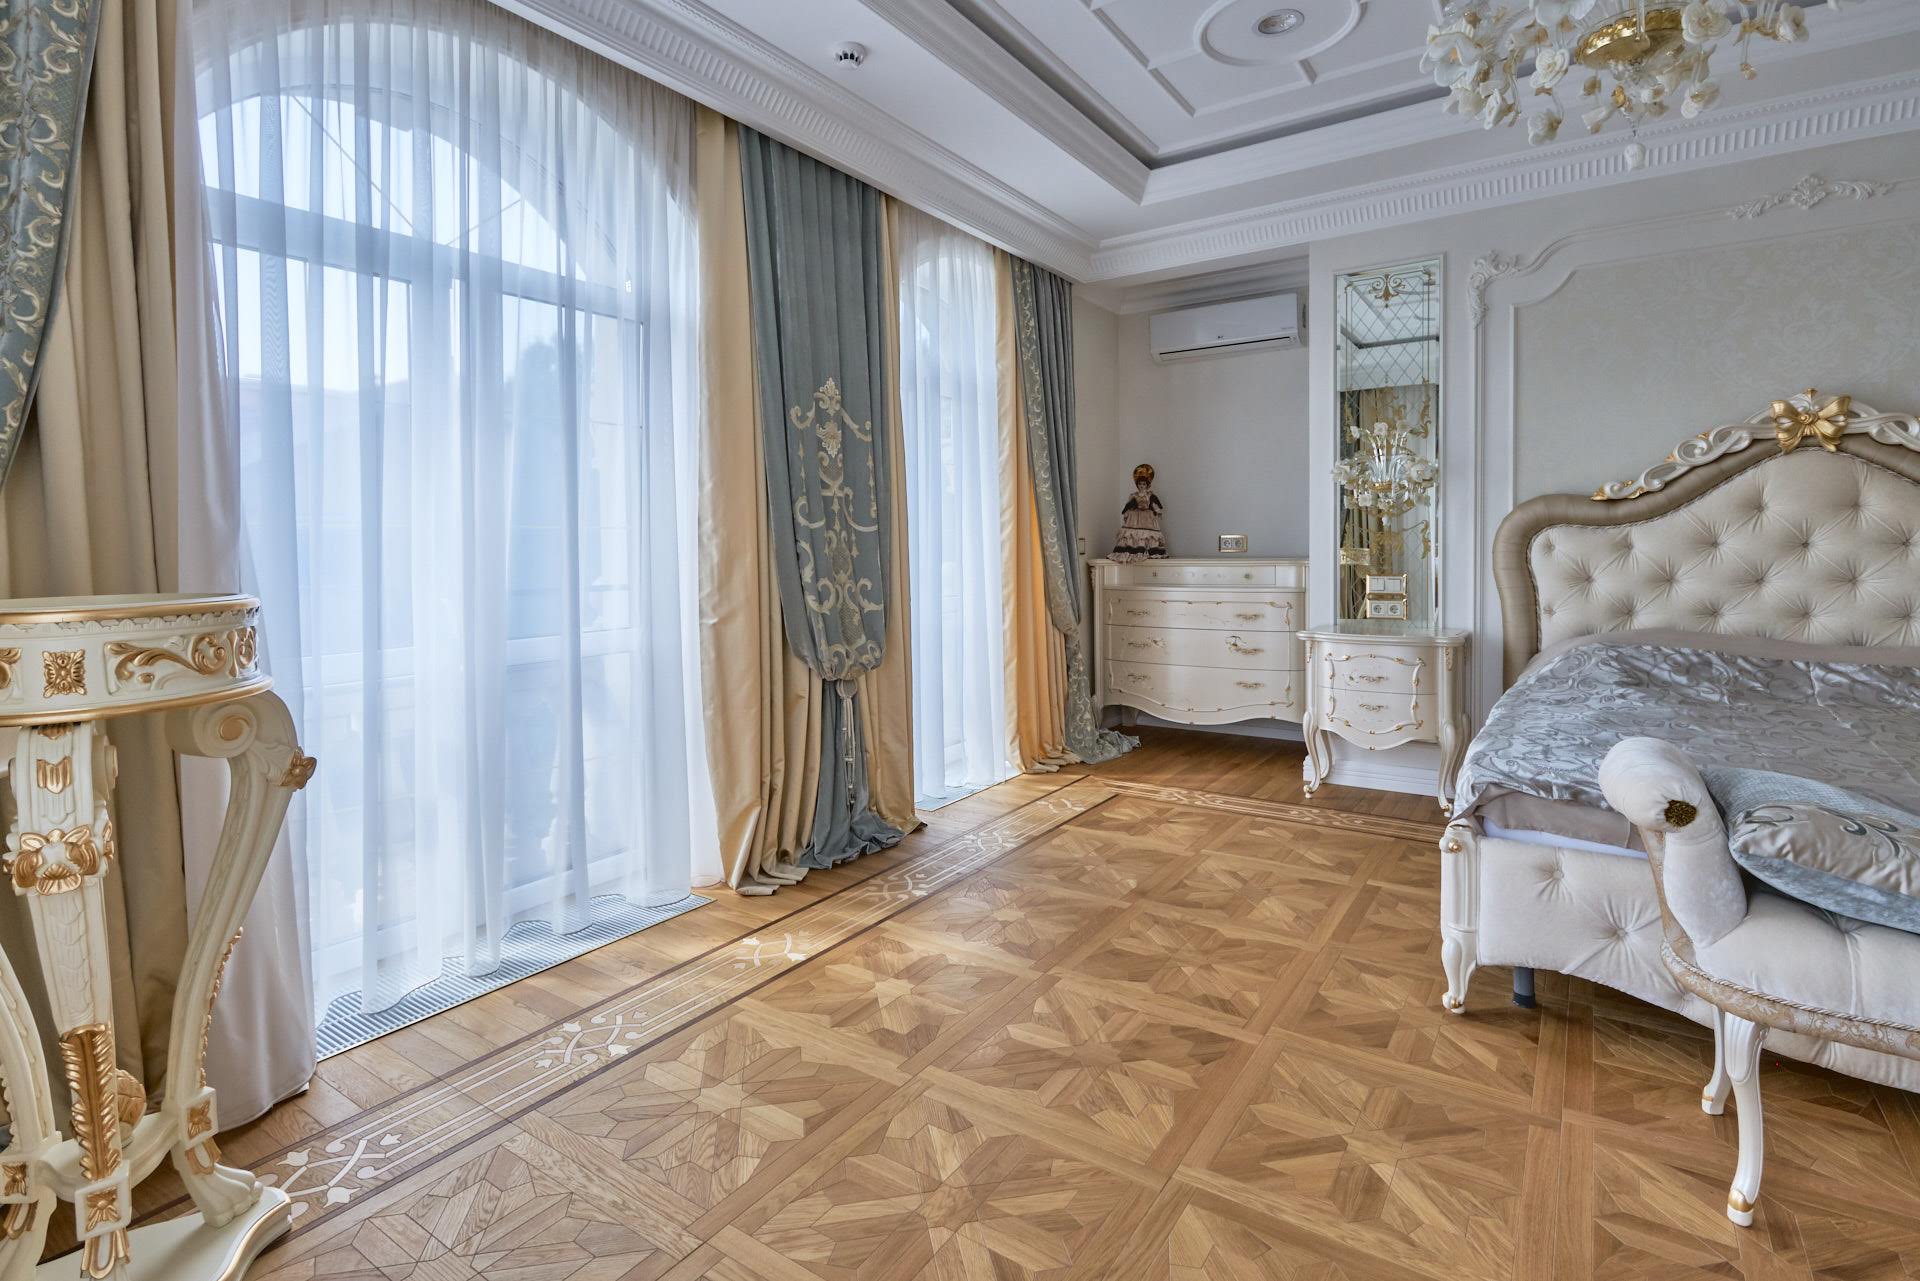 Design, Bedroom in classic style